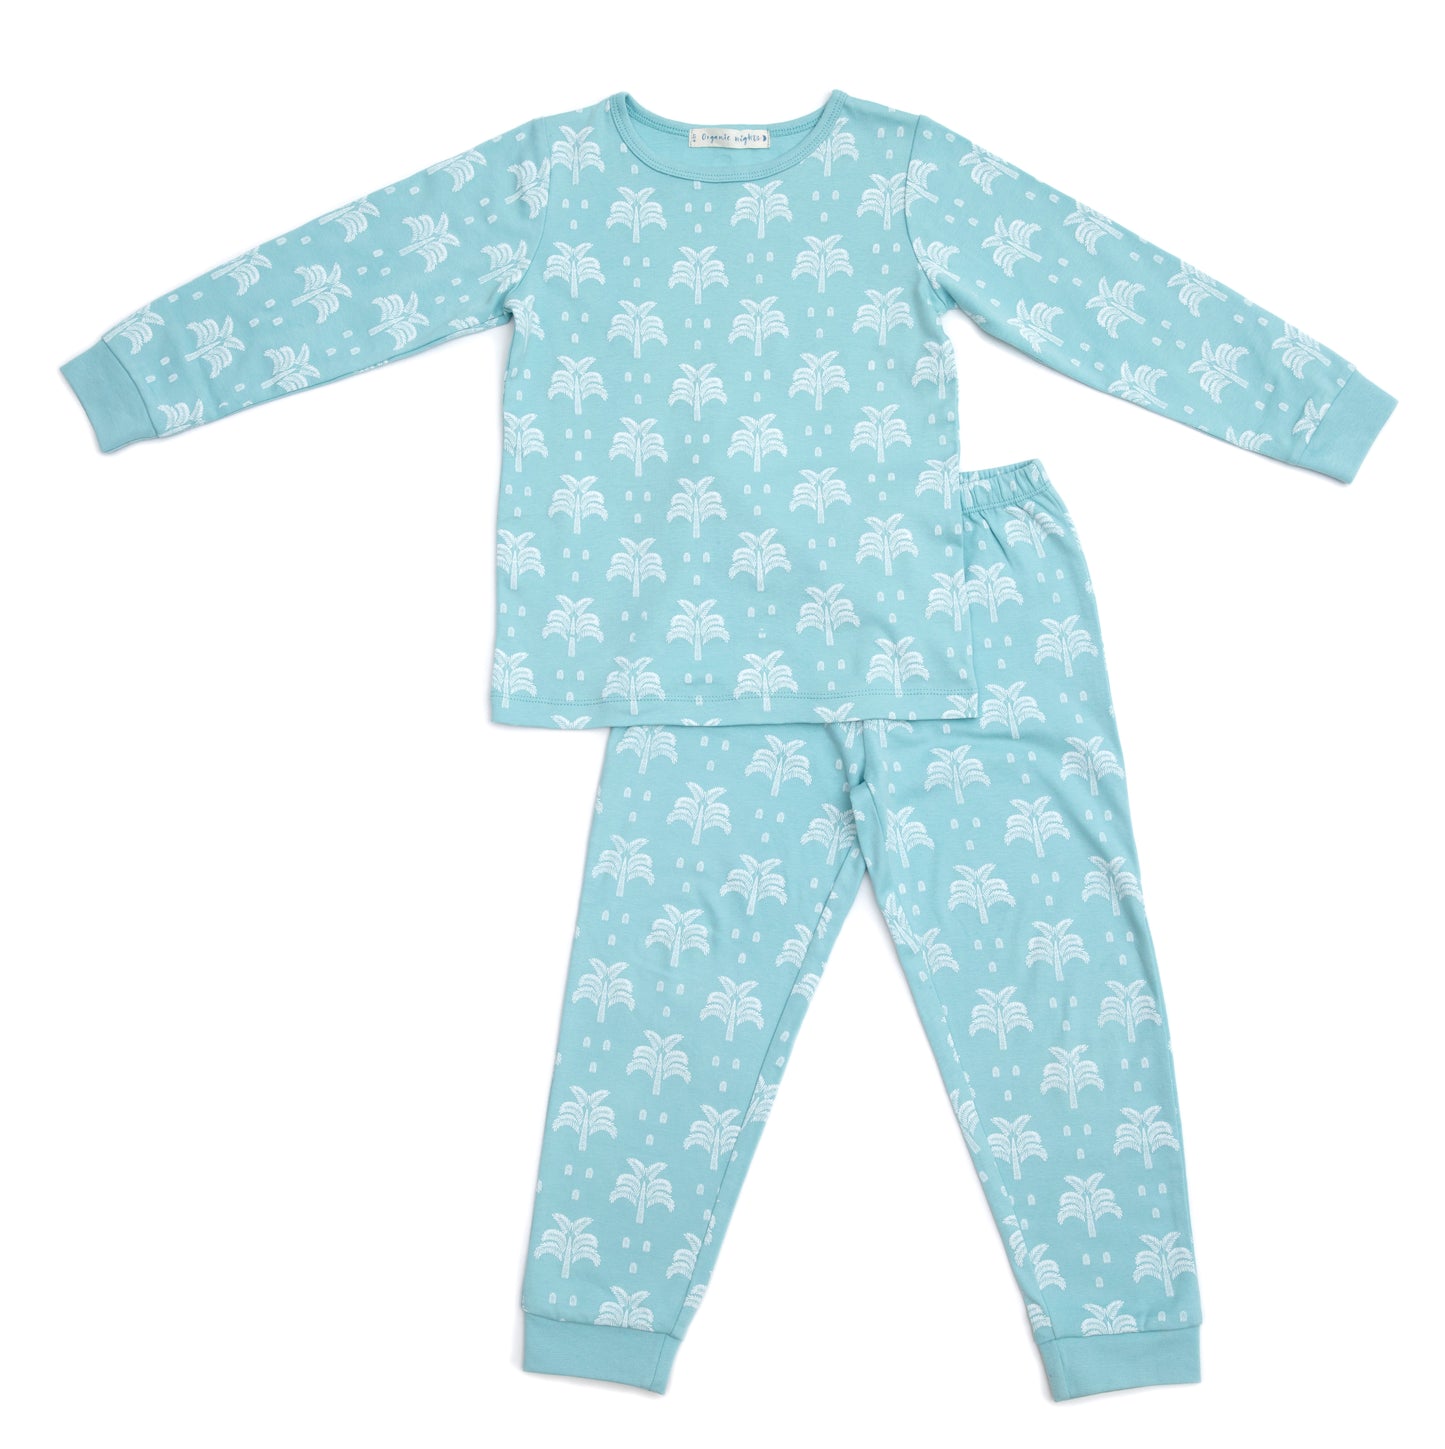 100% Organic Cotton Autumn/Winter Pyjama Set in Aquatic Blue Palms and Pineapples